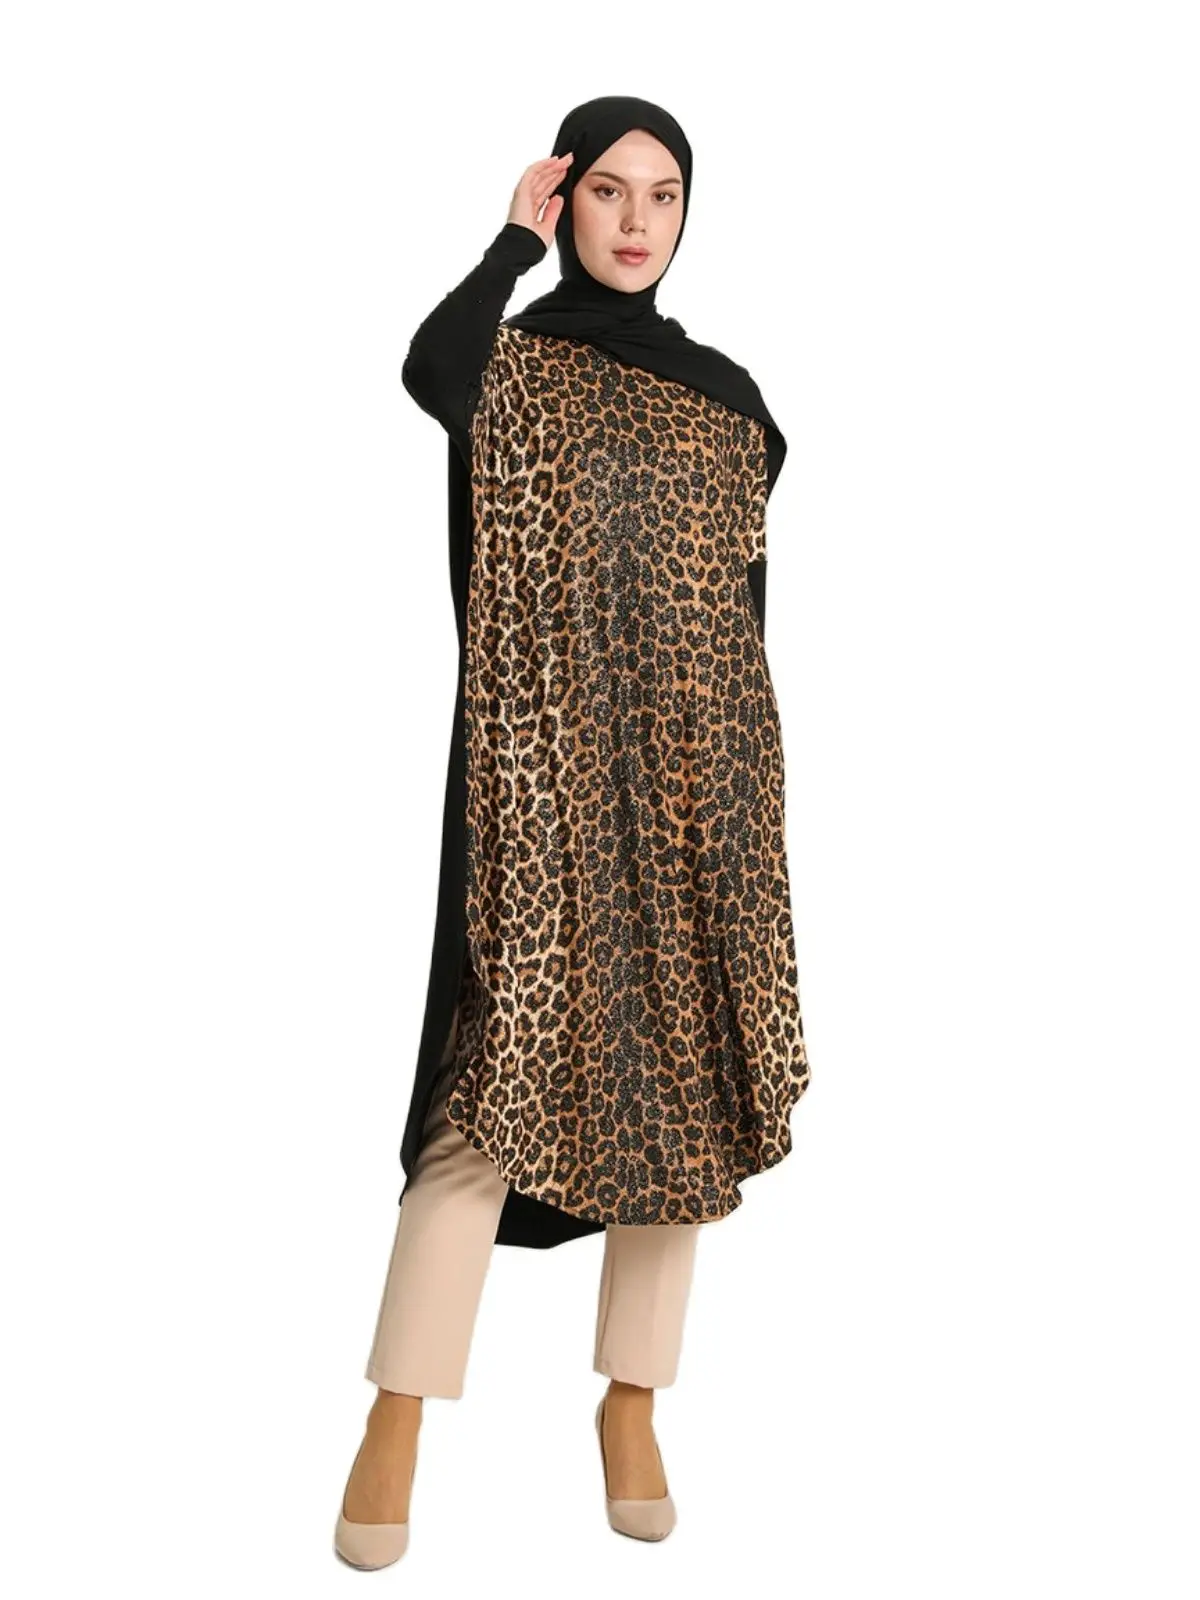 

Leopard Patterned Tunic Long Sleeve Zero Collar Seasonal Muslim Women's Fashion Turkish Arab İslamic Top Stylish Lightweight